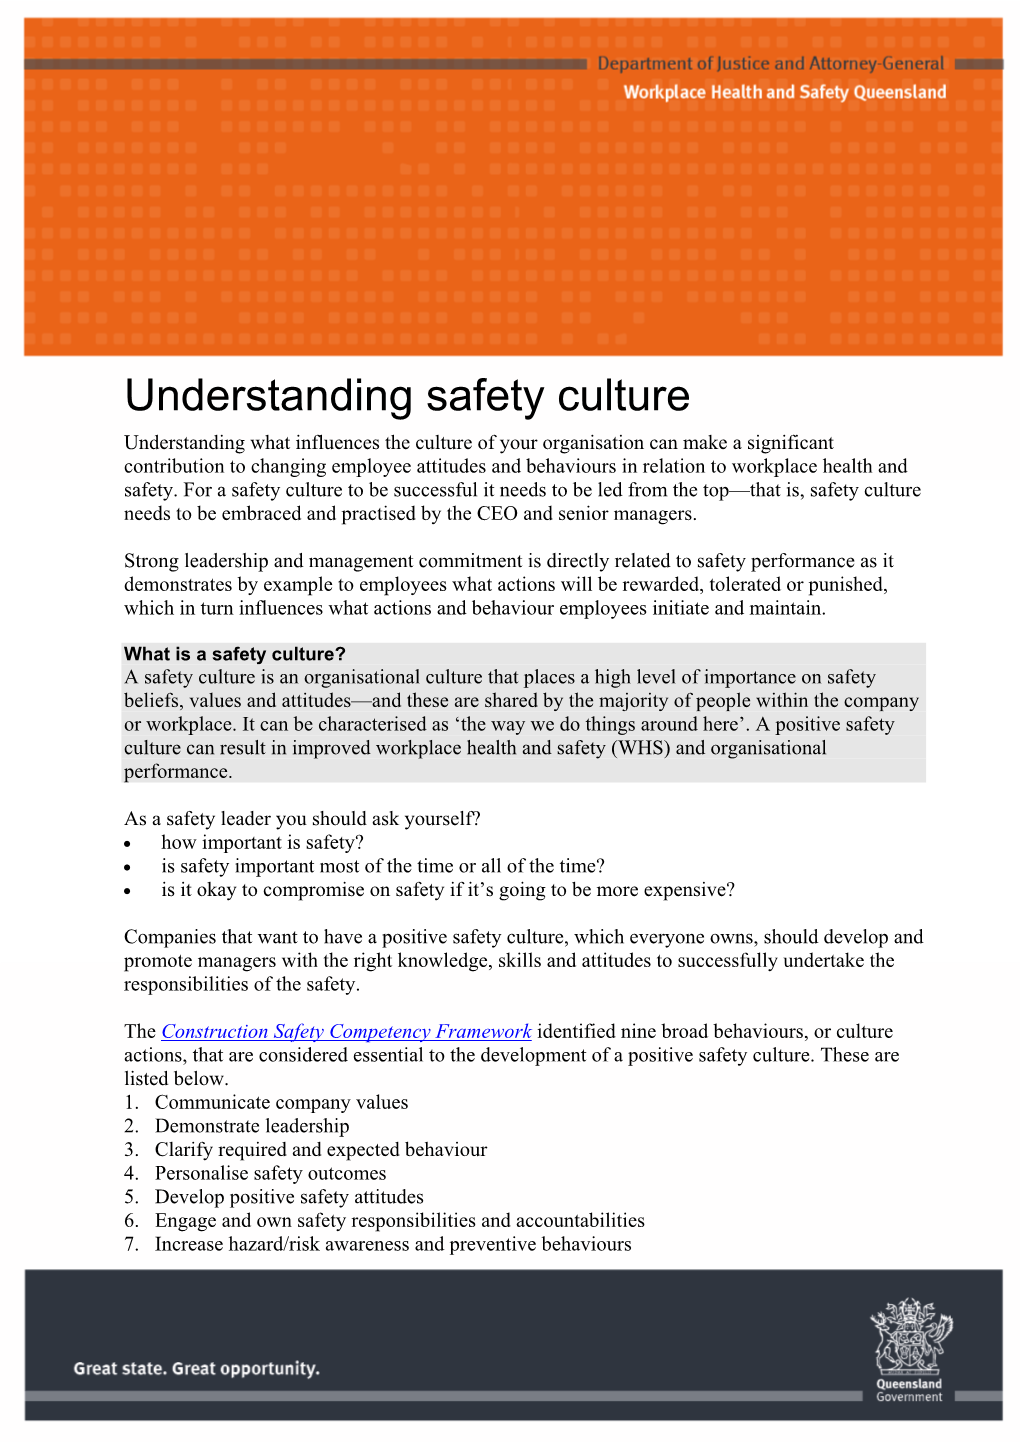 Understanding Safety Culture